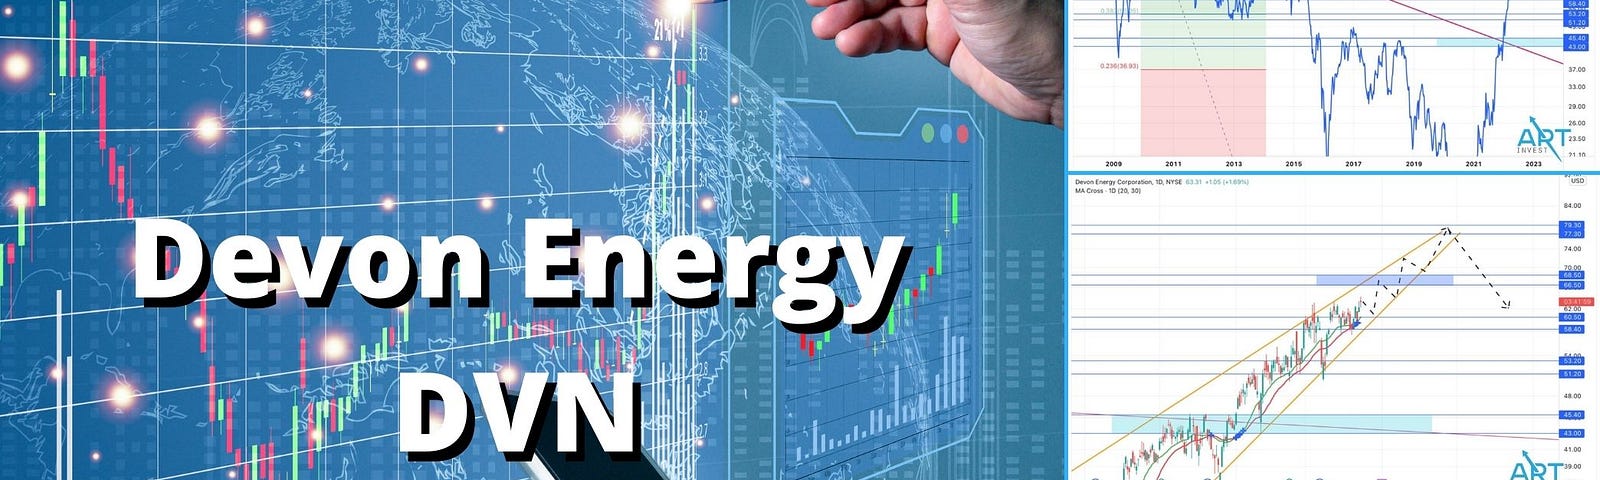 Devon Energy — Where the chart is heading